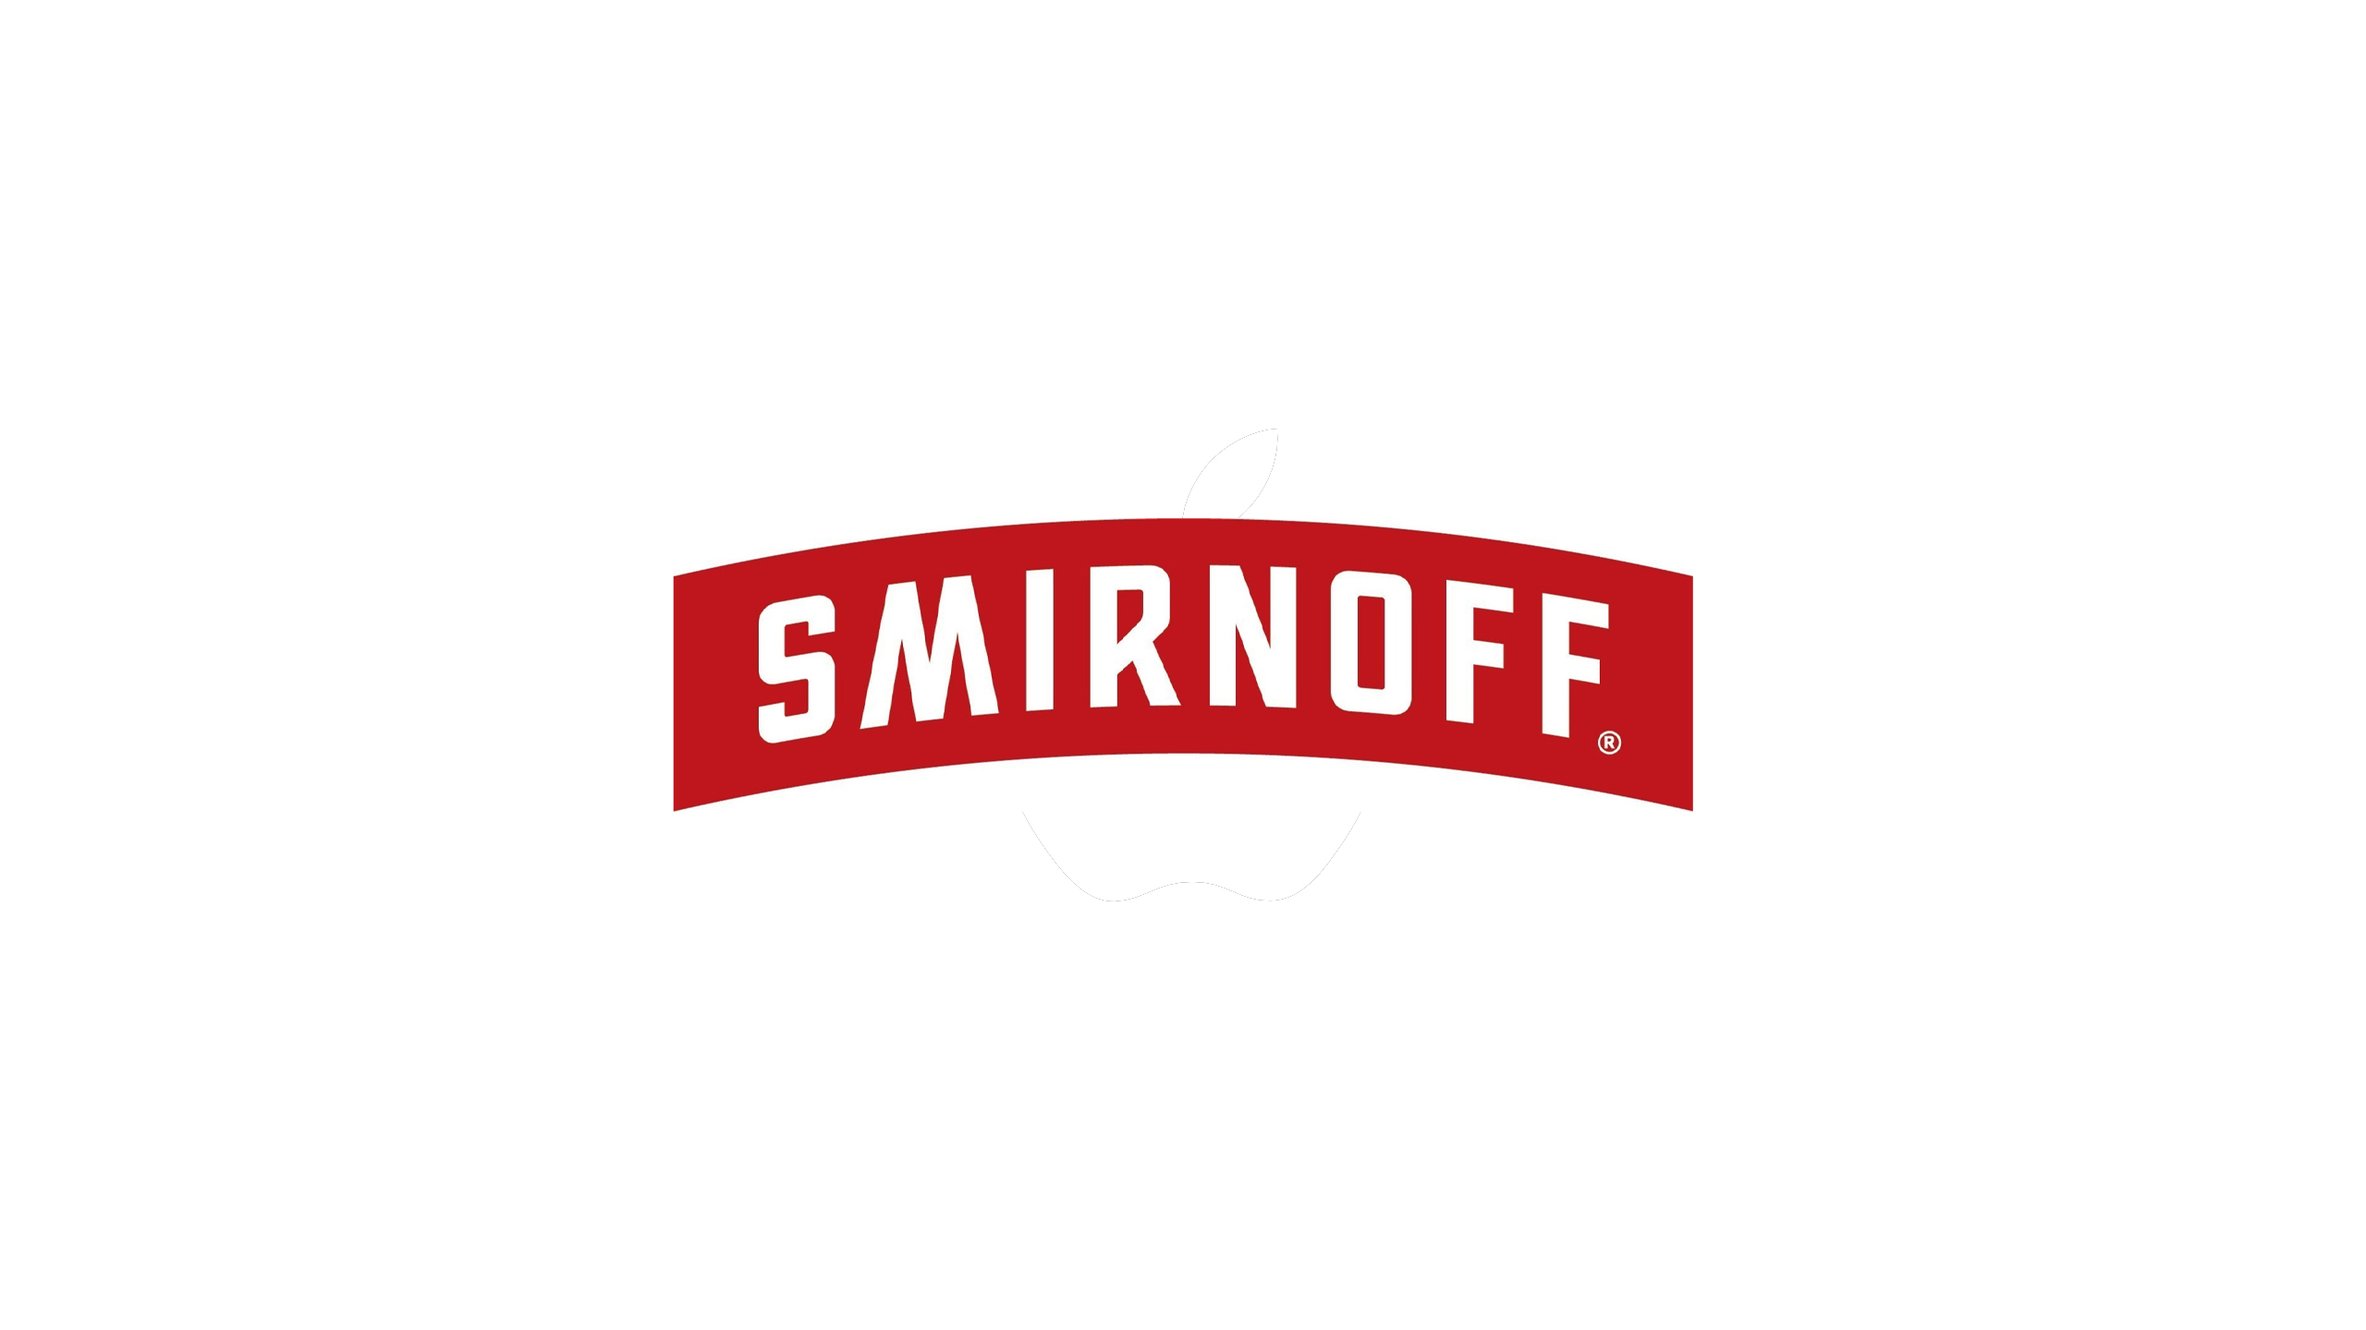 Smirnoff Vodka Seeking Friends for a Social Media Promo ??